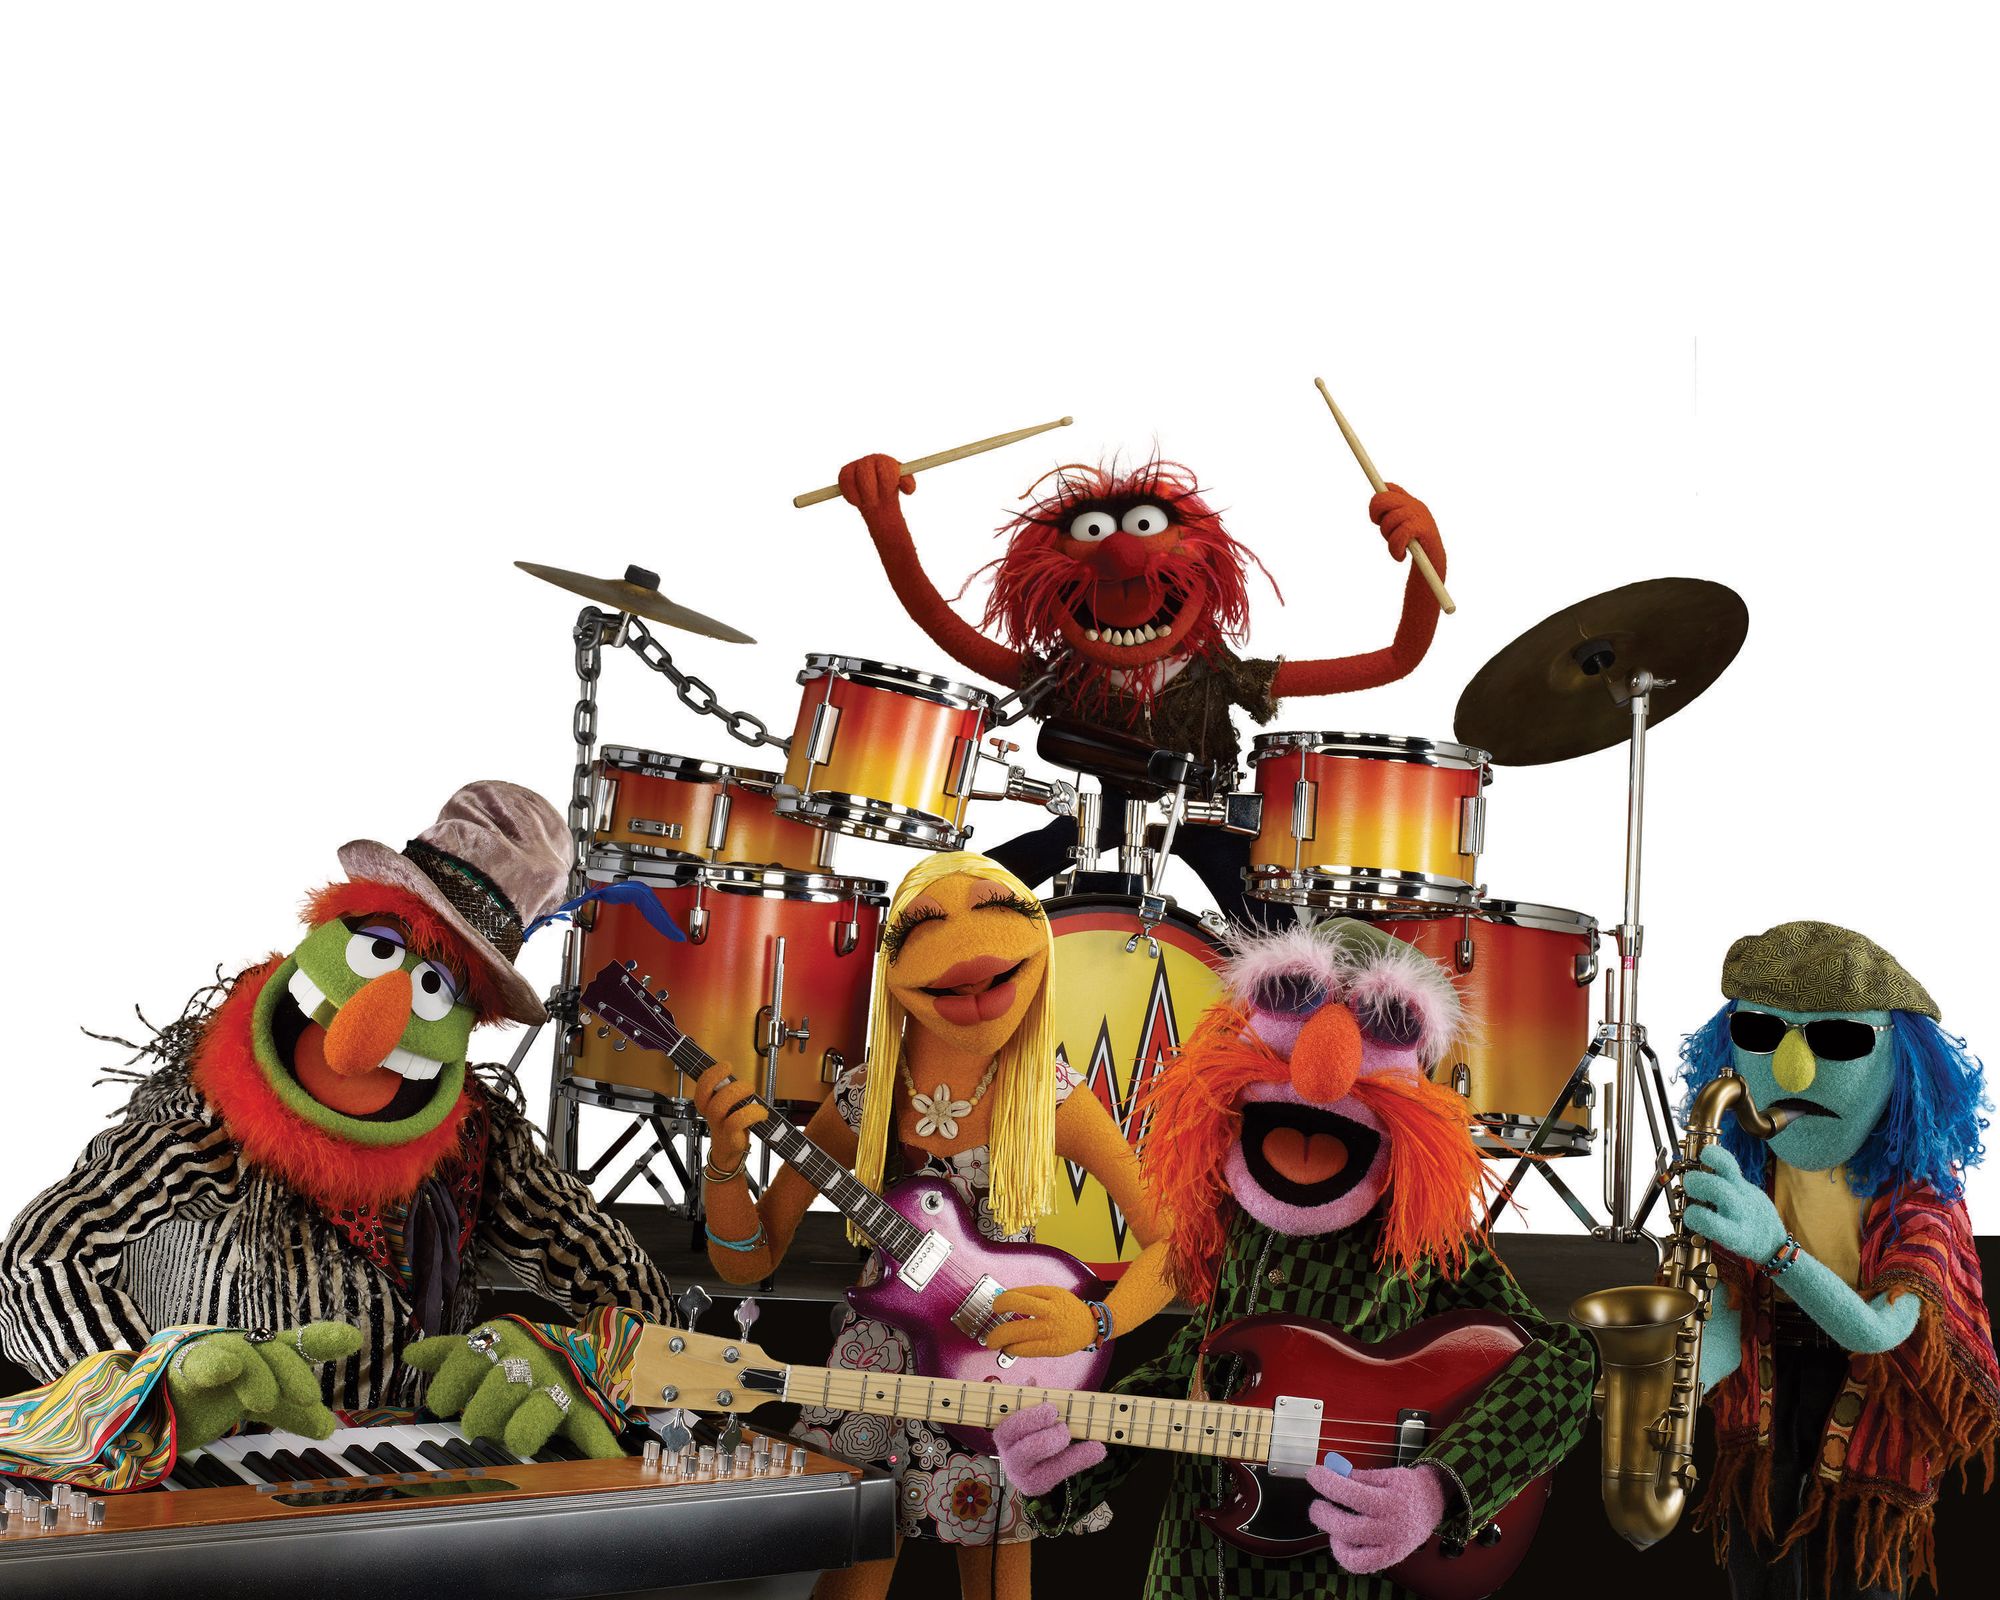 Image result from https://tvseriesfinale.com/tv-show/muppets-watch-electric-mayhem-rock-outside-lands-music-festival/